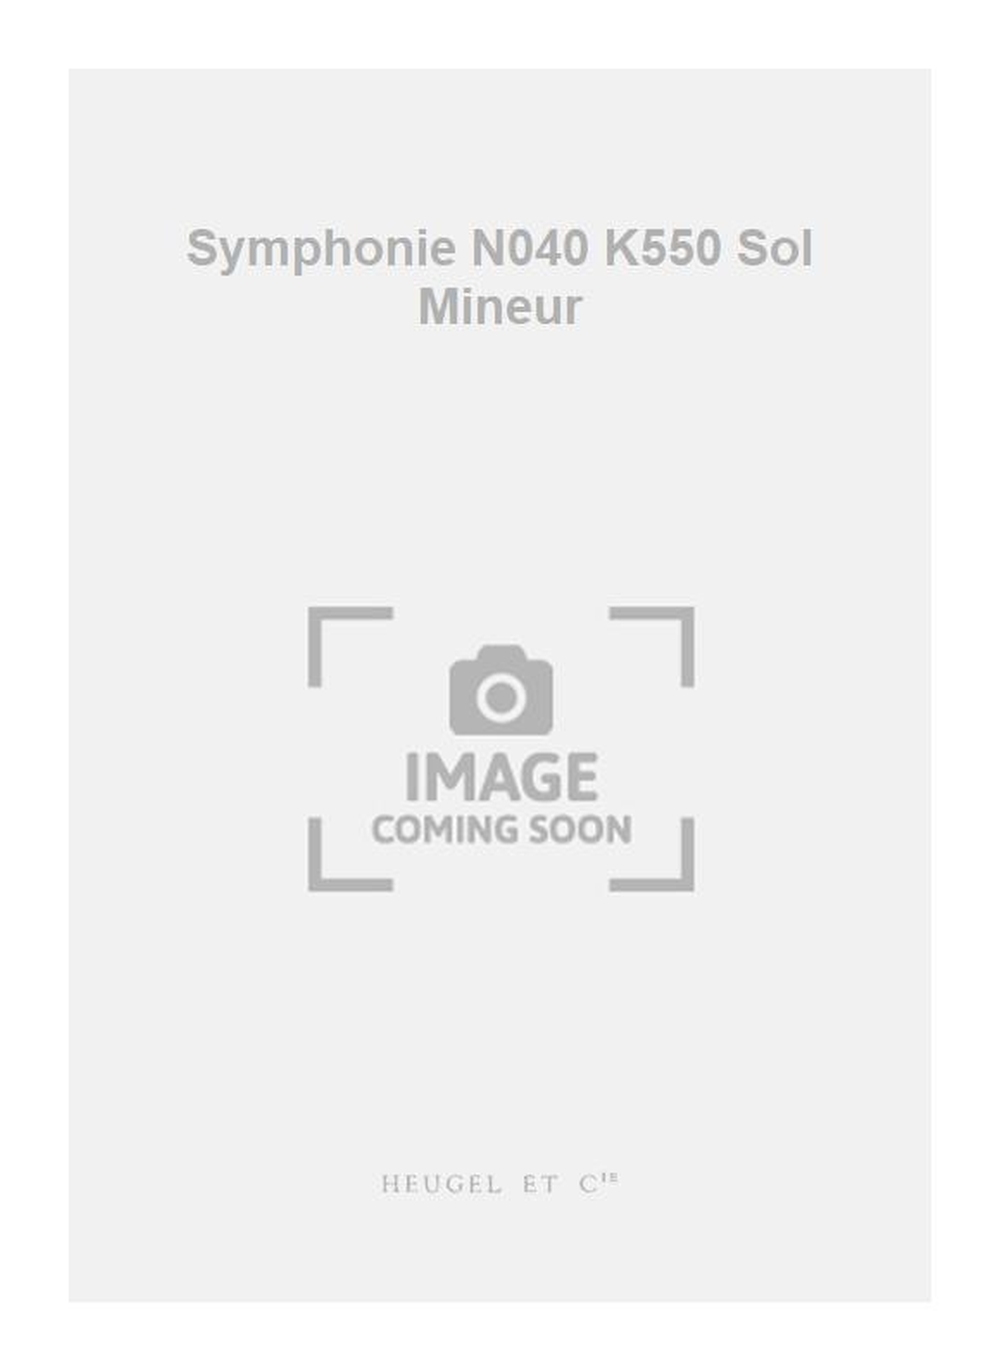 Wolfgang Amadeus Mozart: Symphonie N040 K550 Sol Mineur